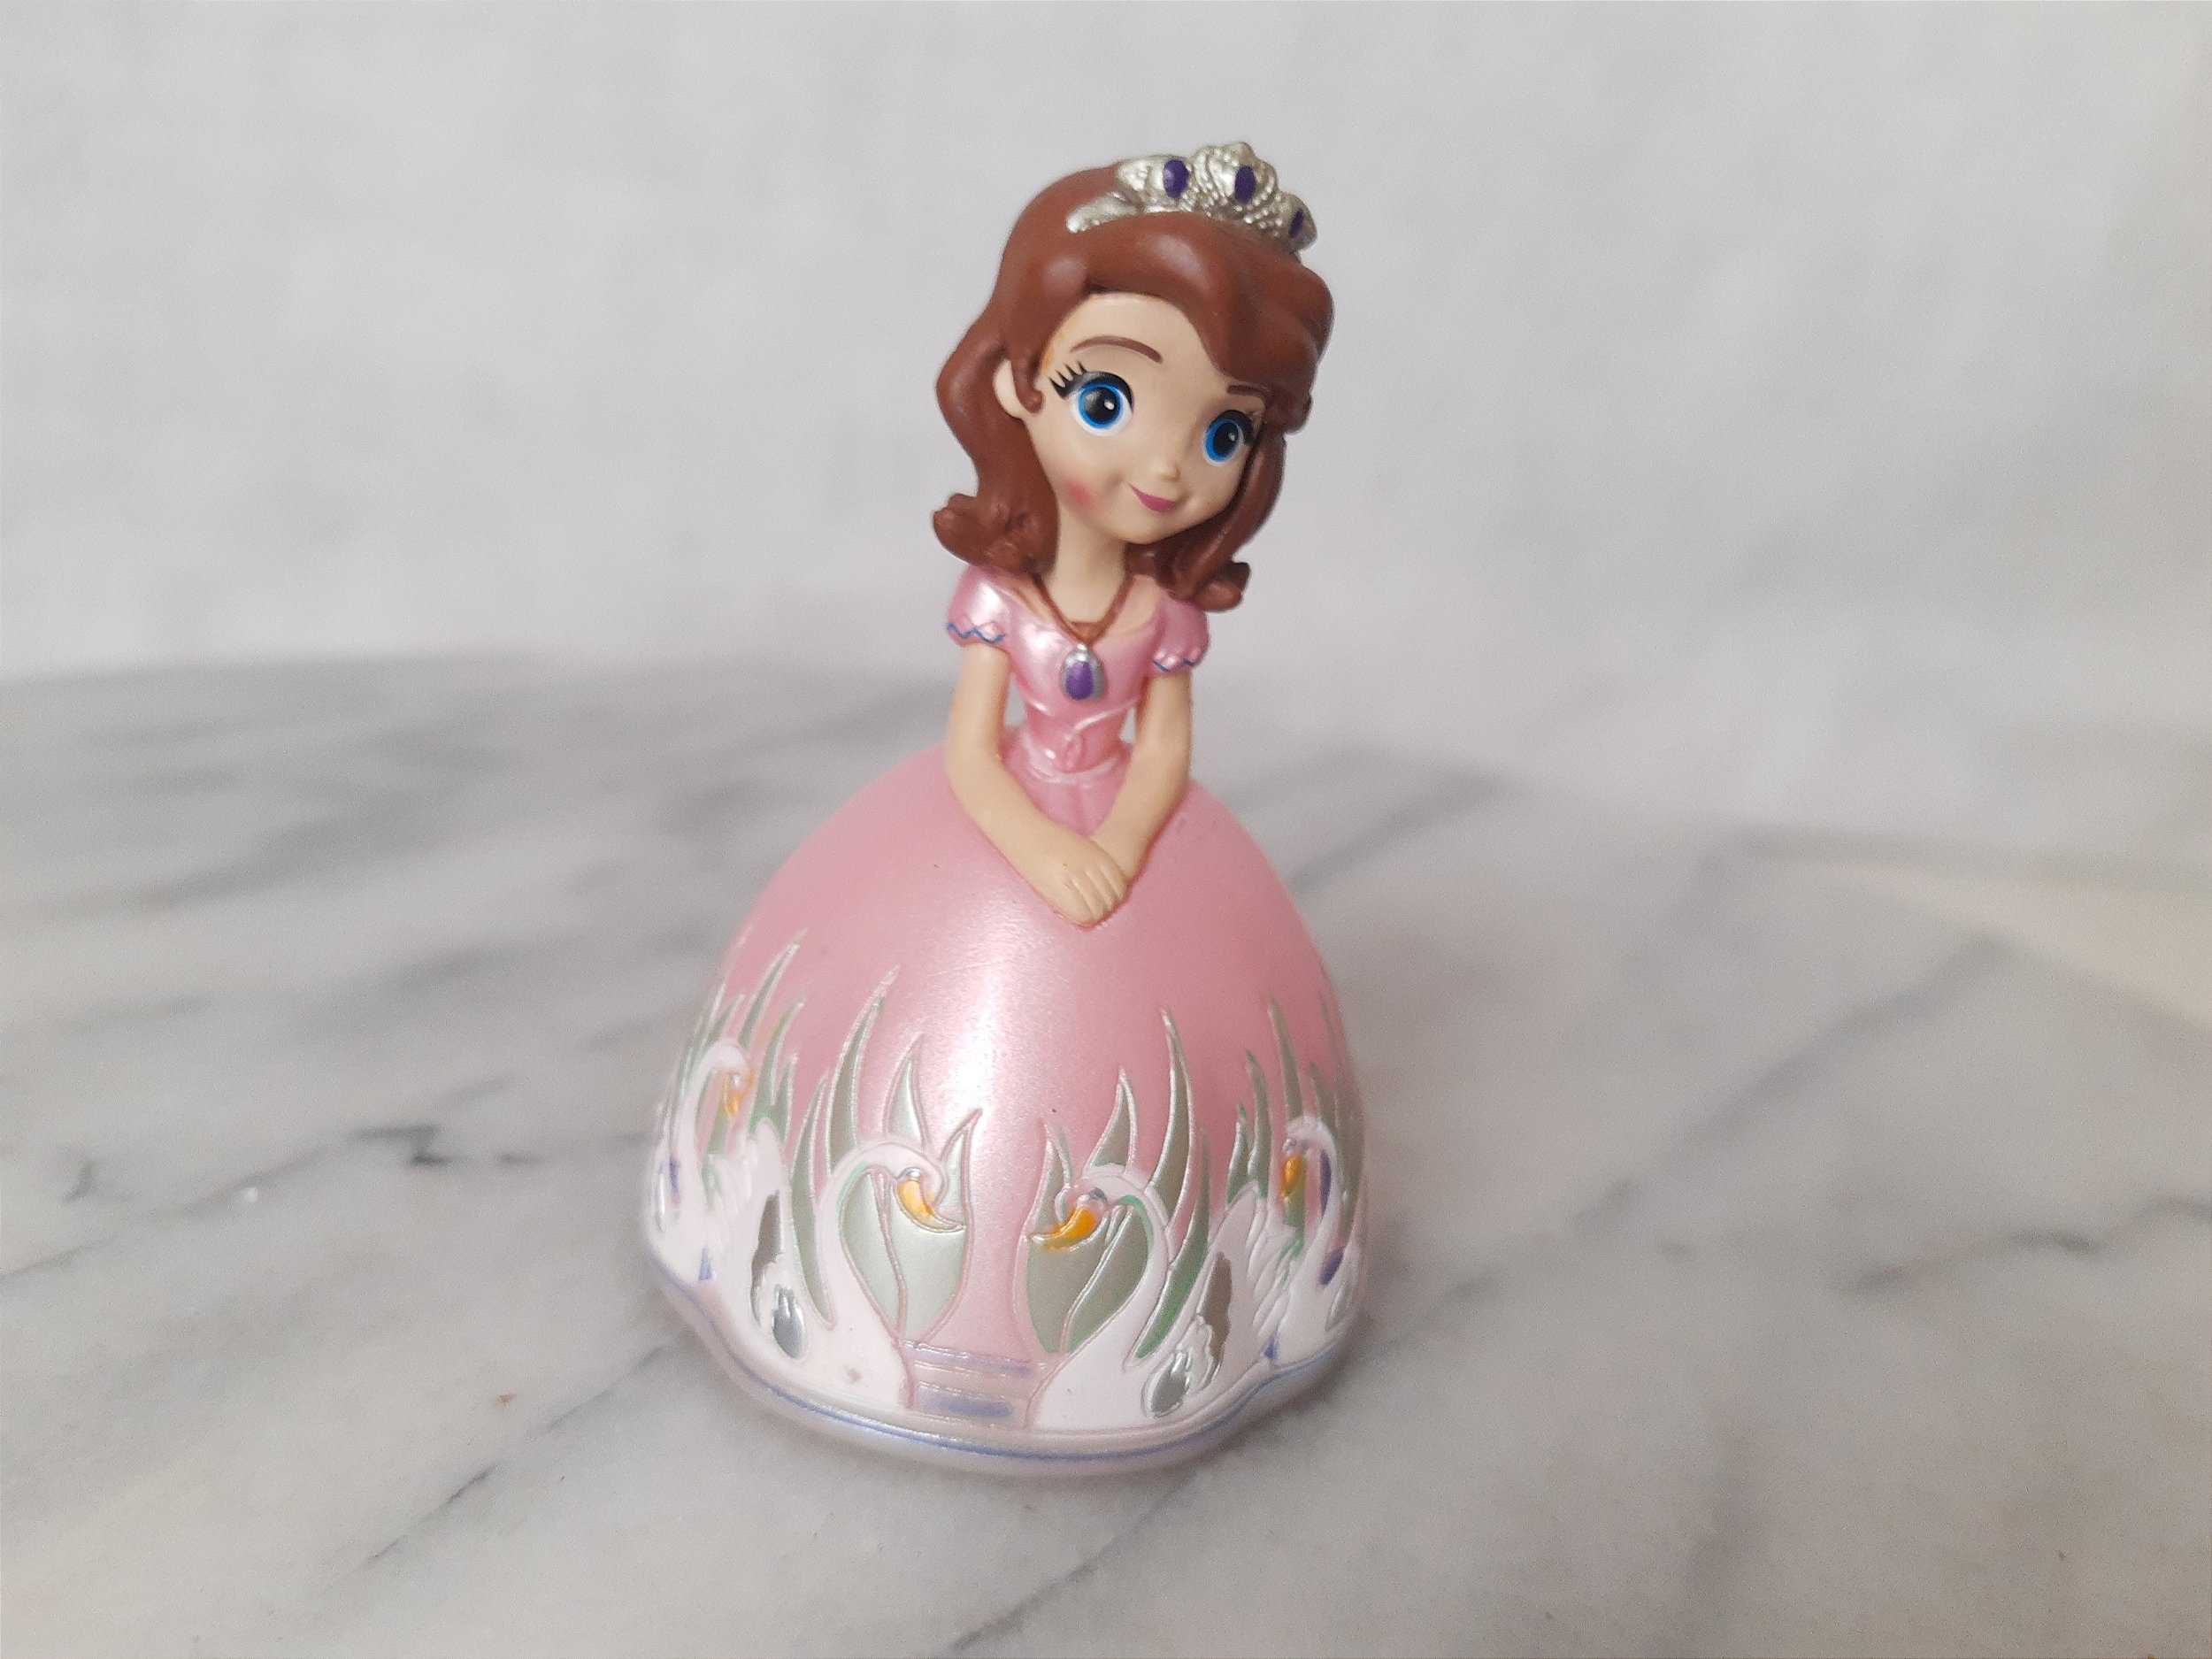 Boneca Princesa Aurora Disney Animators - Disney Store no Shoptime